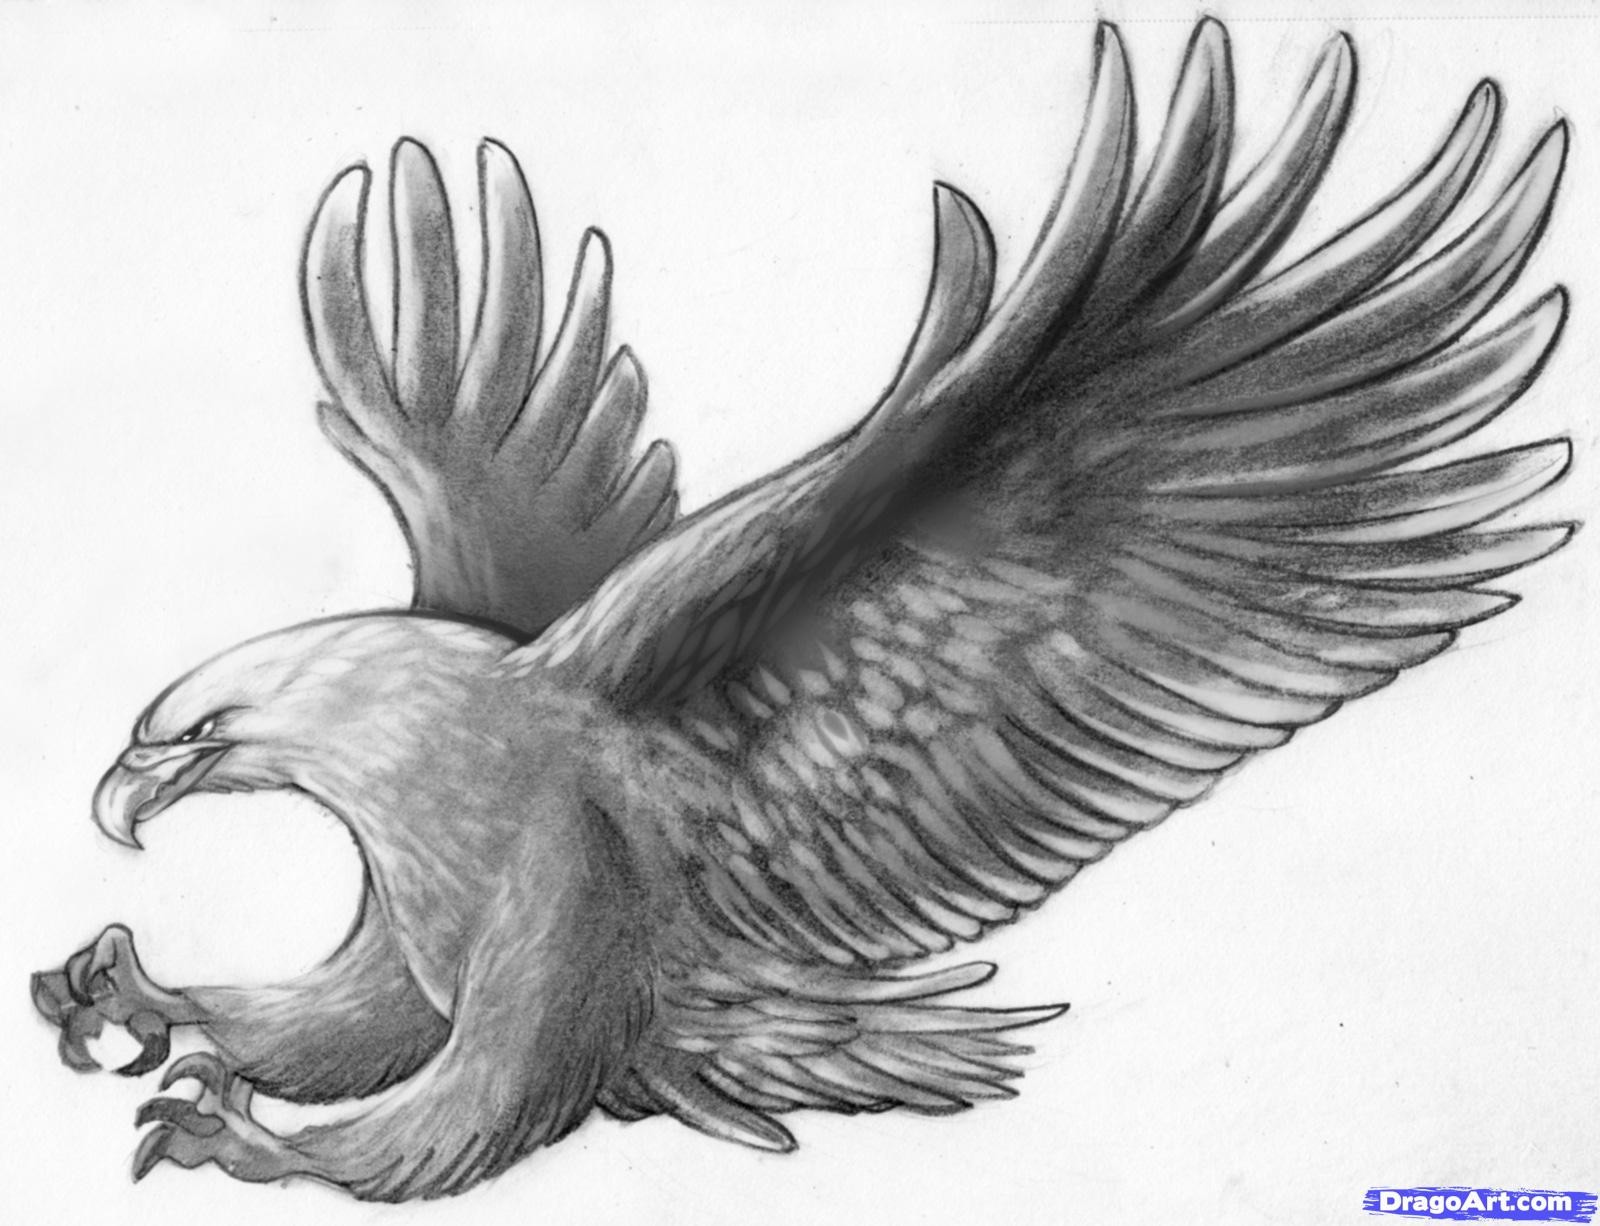 American Bald Eagle Sketches at Explore collection